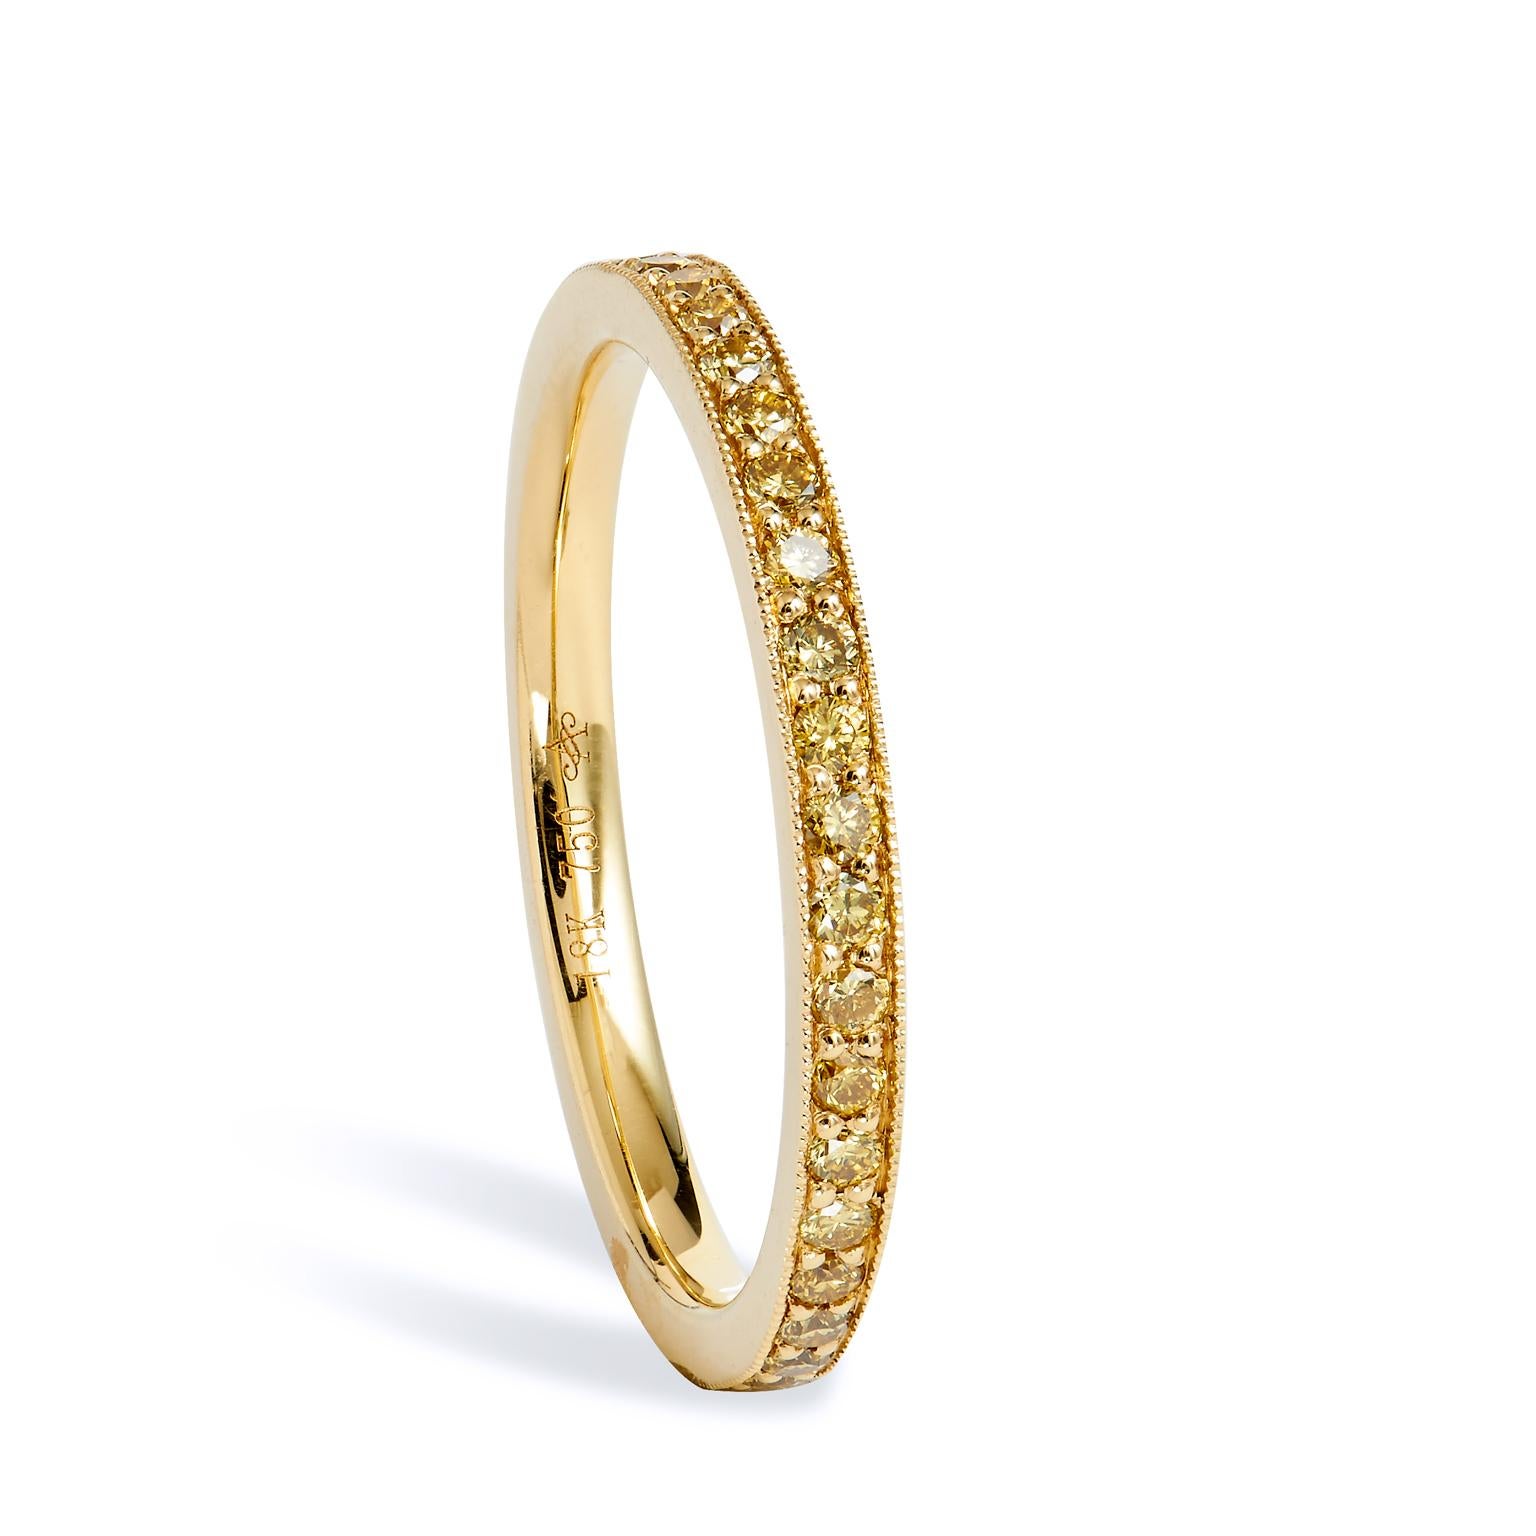 Brilliant Cut .50 carat Yellow Diamond Eternity Band Ring set in 18kt Yellow Gold Size 6